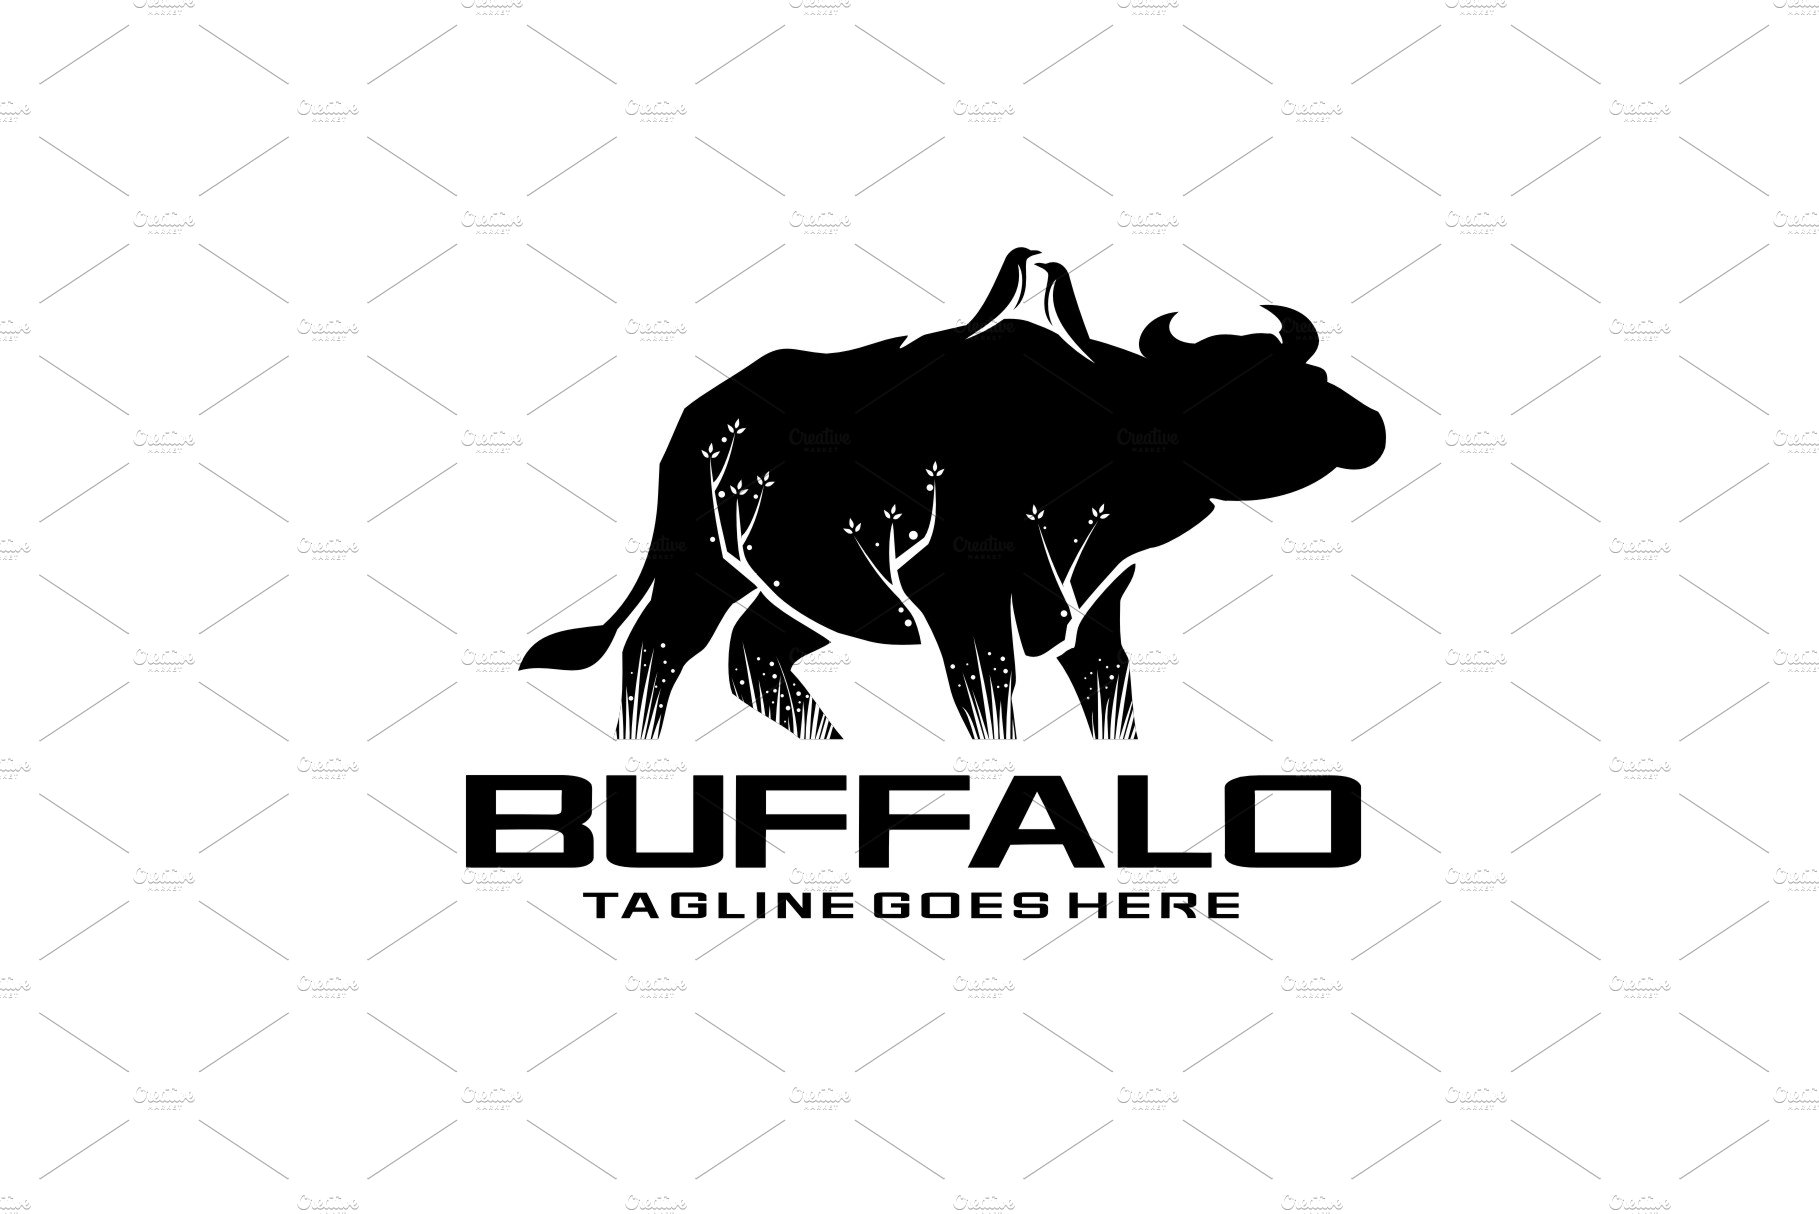 Black Buffalo cover image.